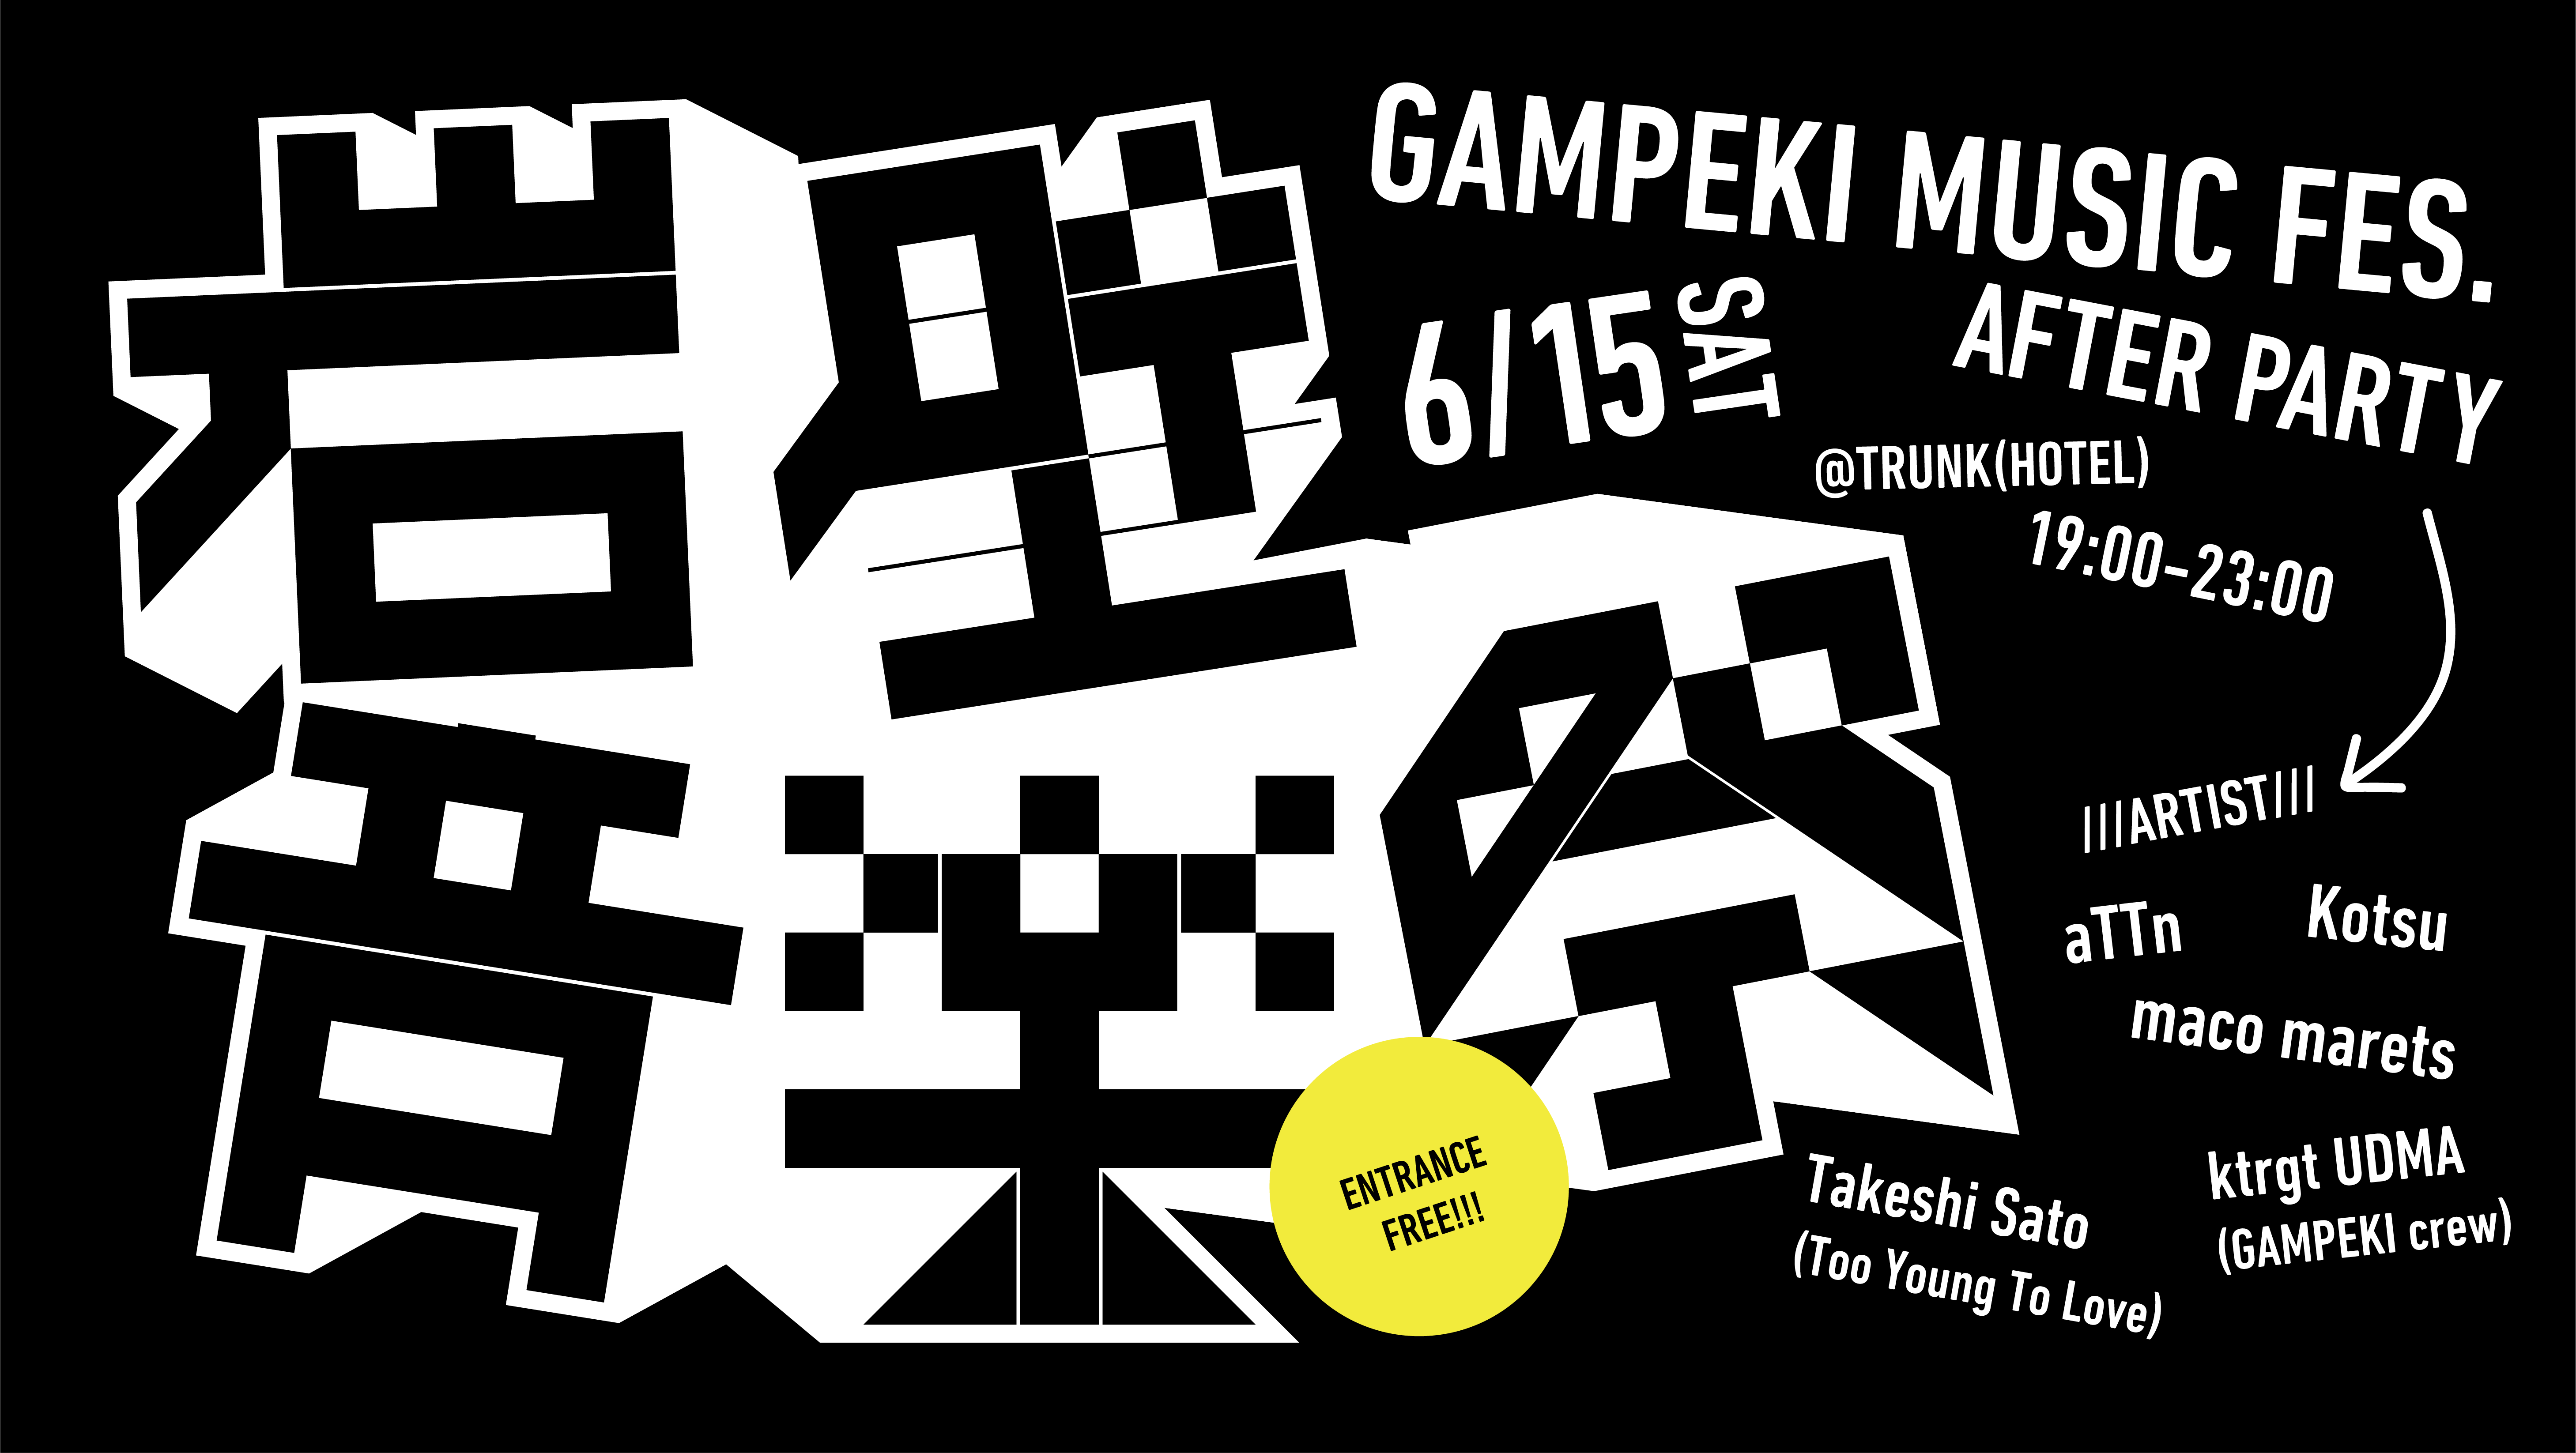 GAMPEKI MUSIC FES. AFTER PARTY